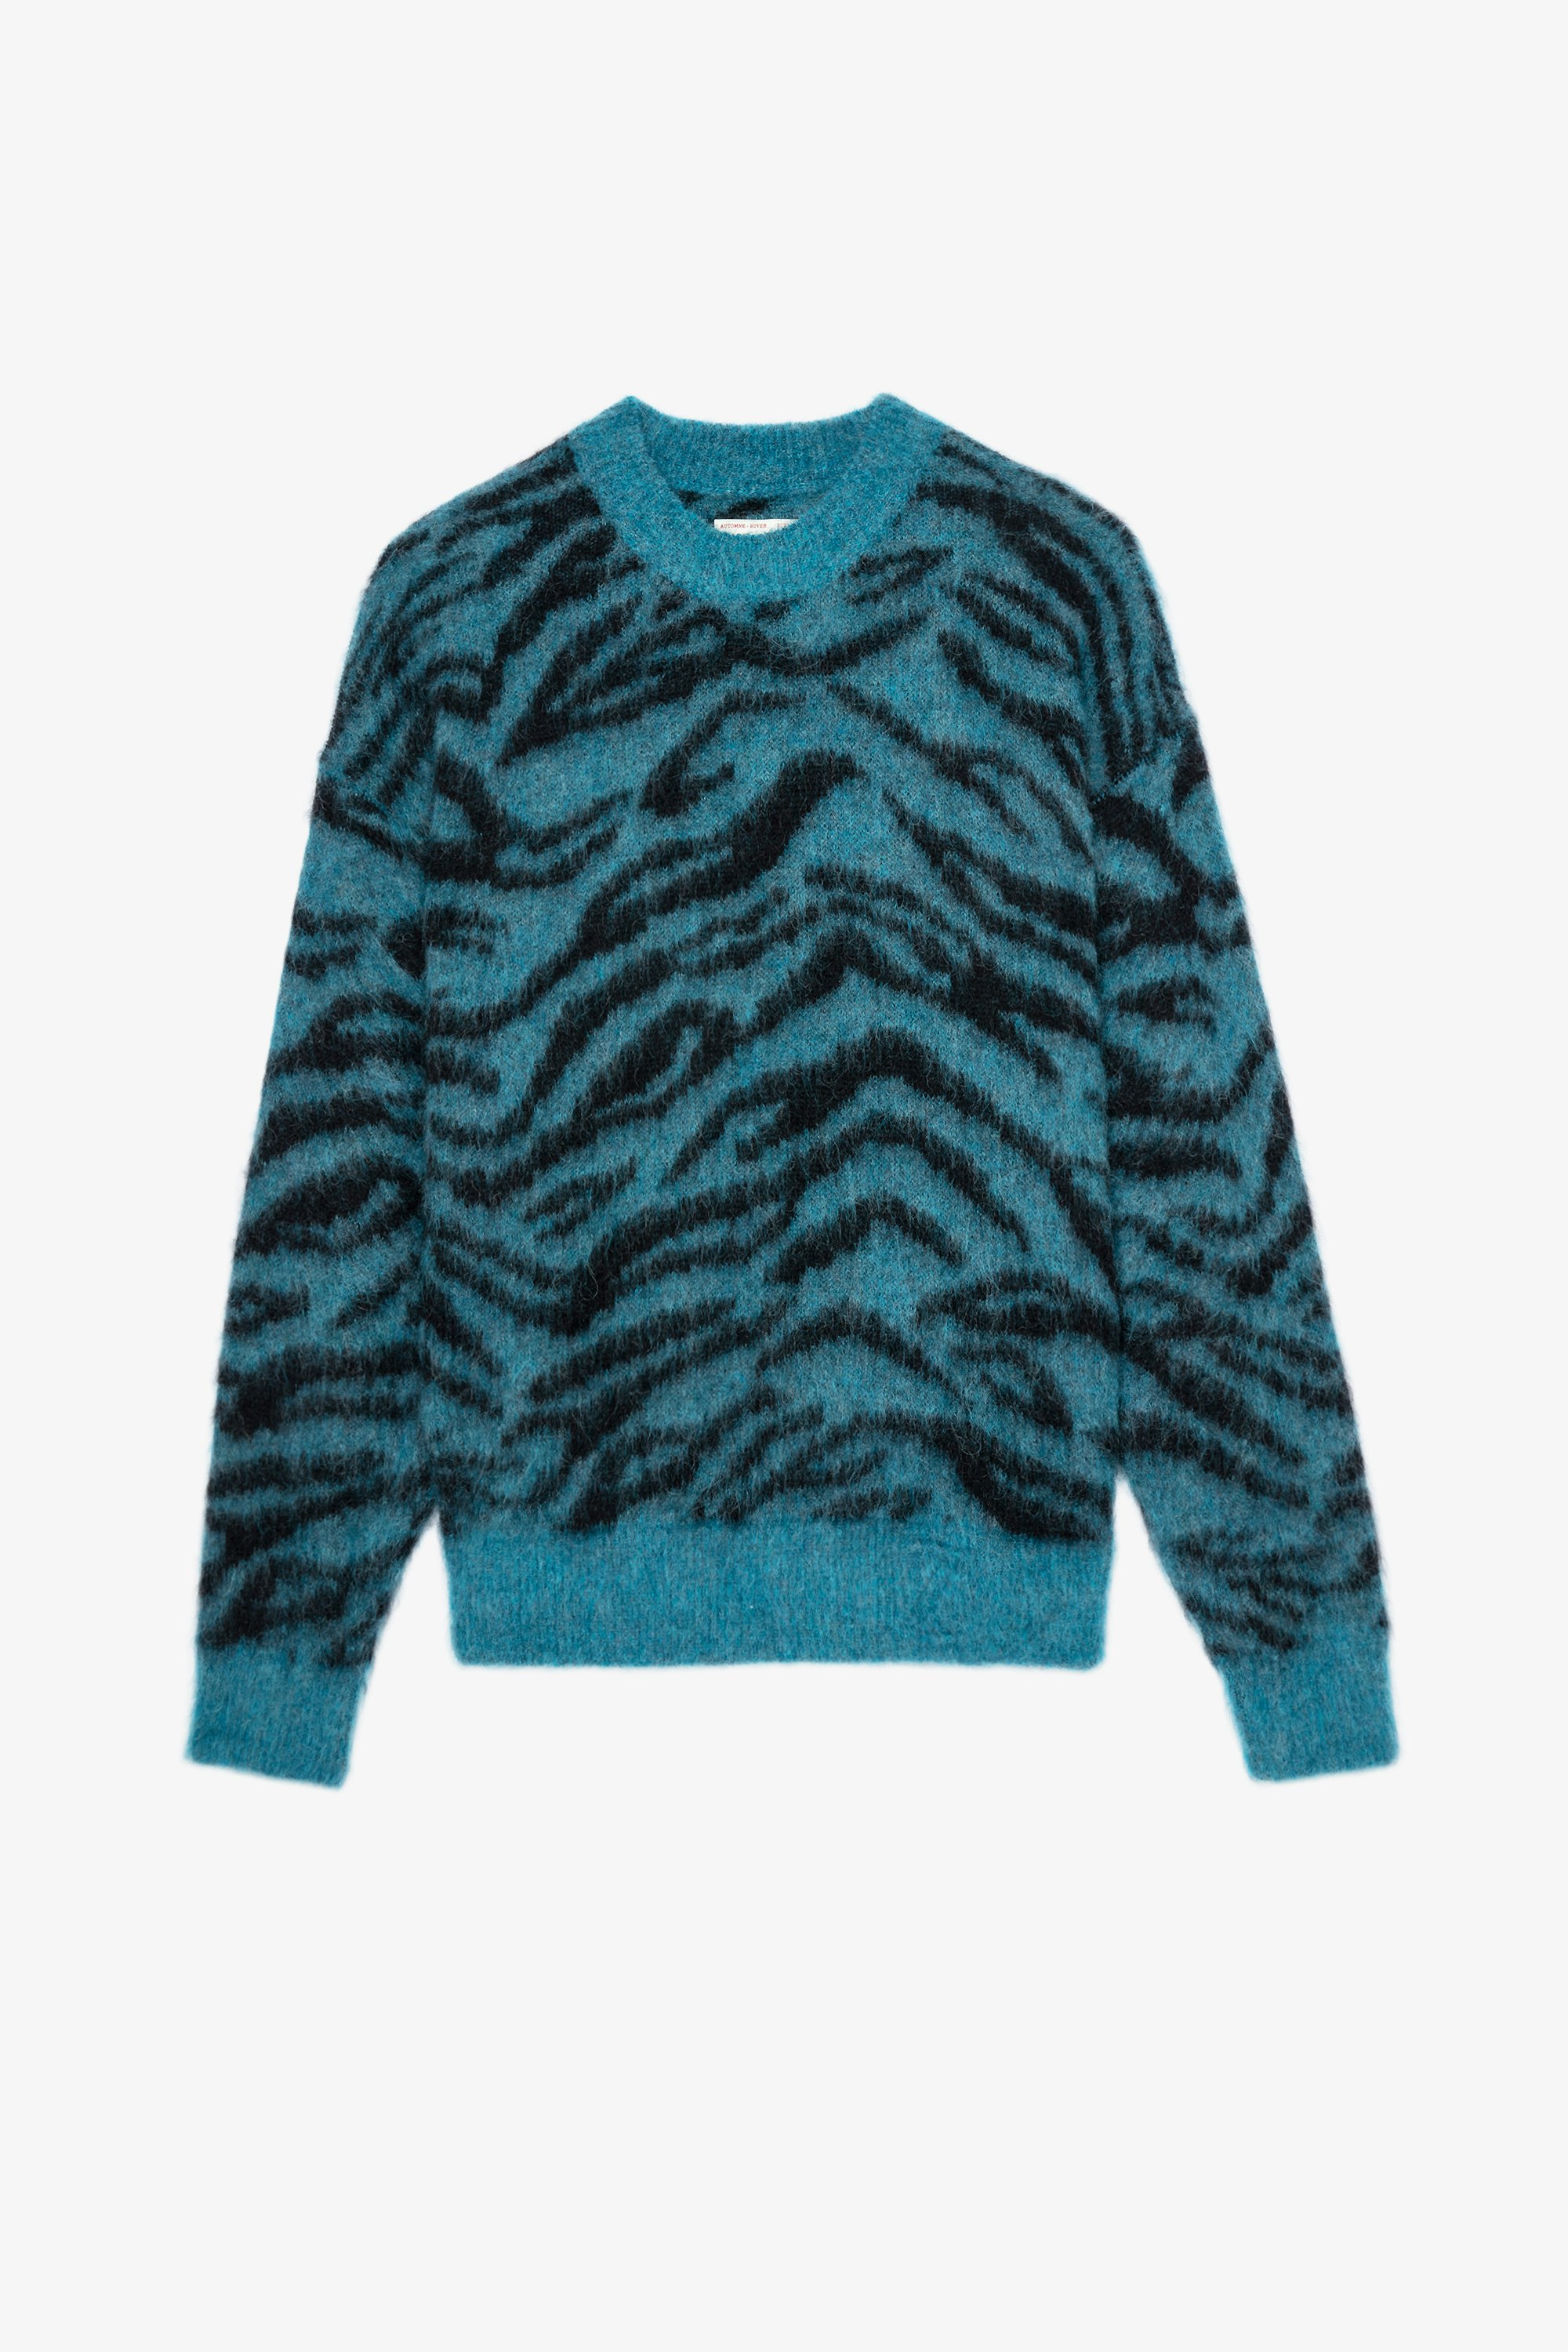 Rita Tiger Jumper Men’s blue round-neck knit jumper with long sleeves